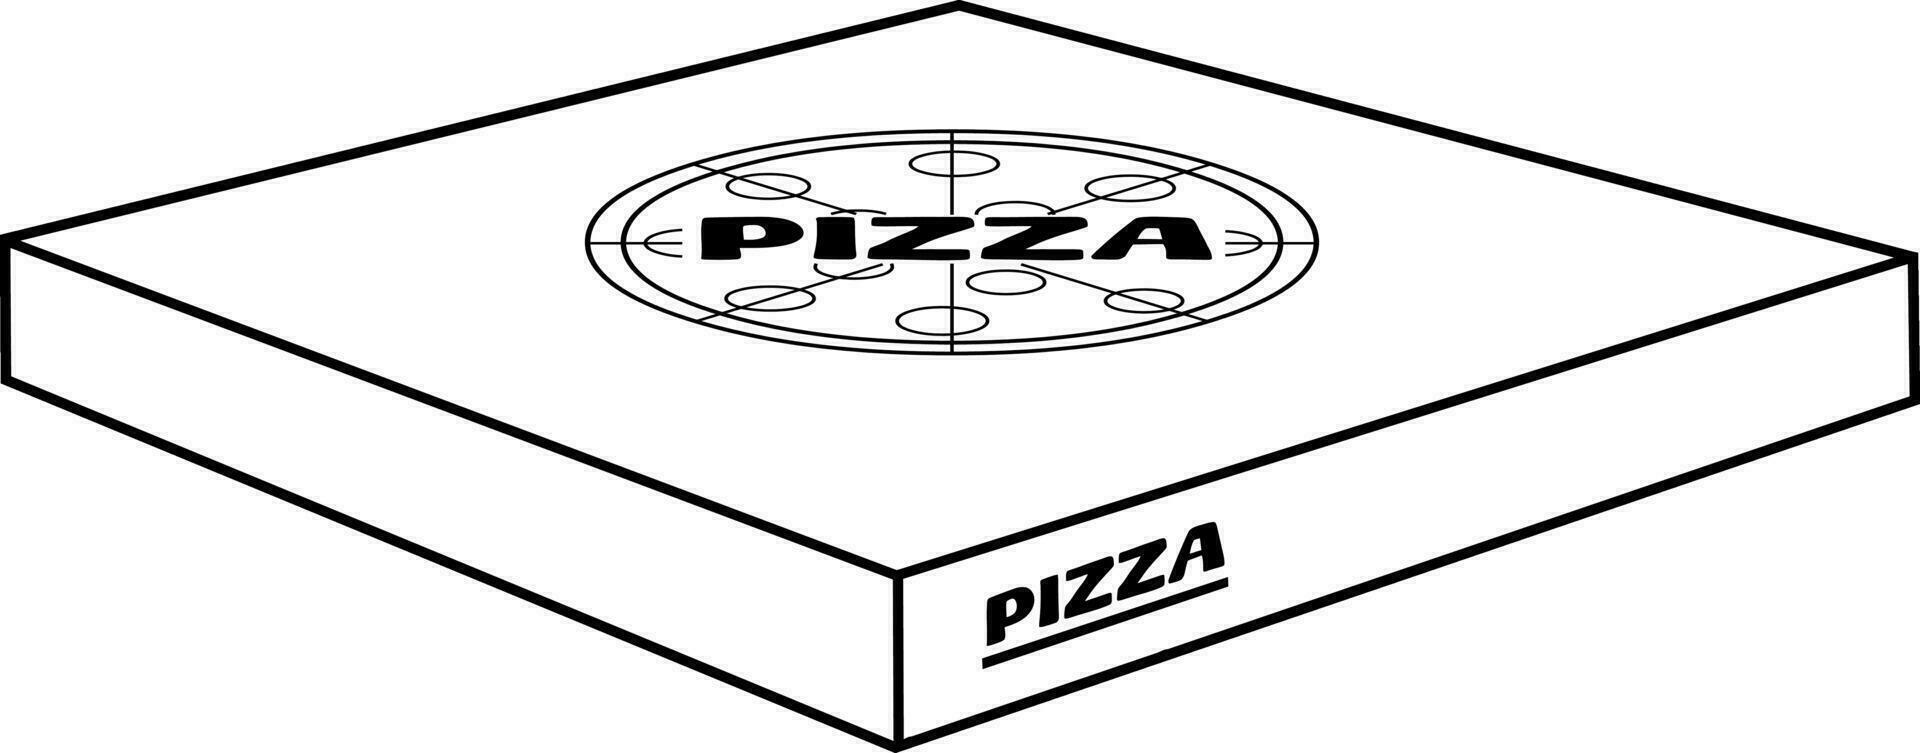 Outlined Cartoon Square Carton Pizza Box. Vector Hand Drawn Illustration